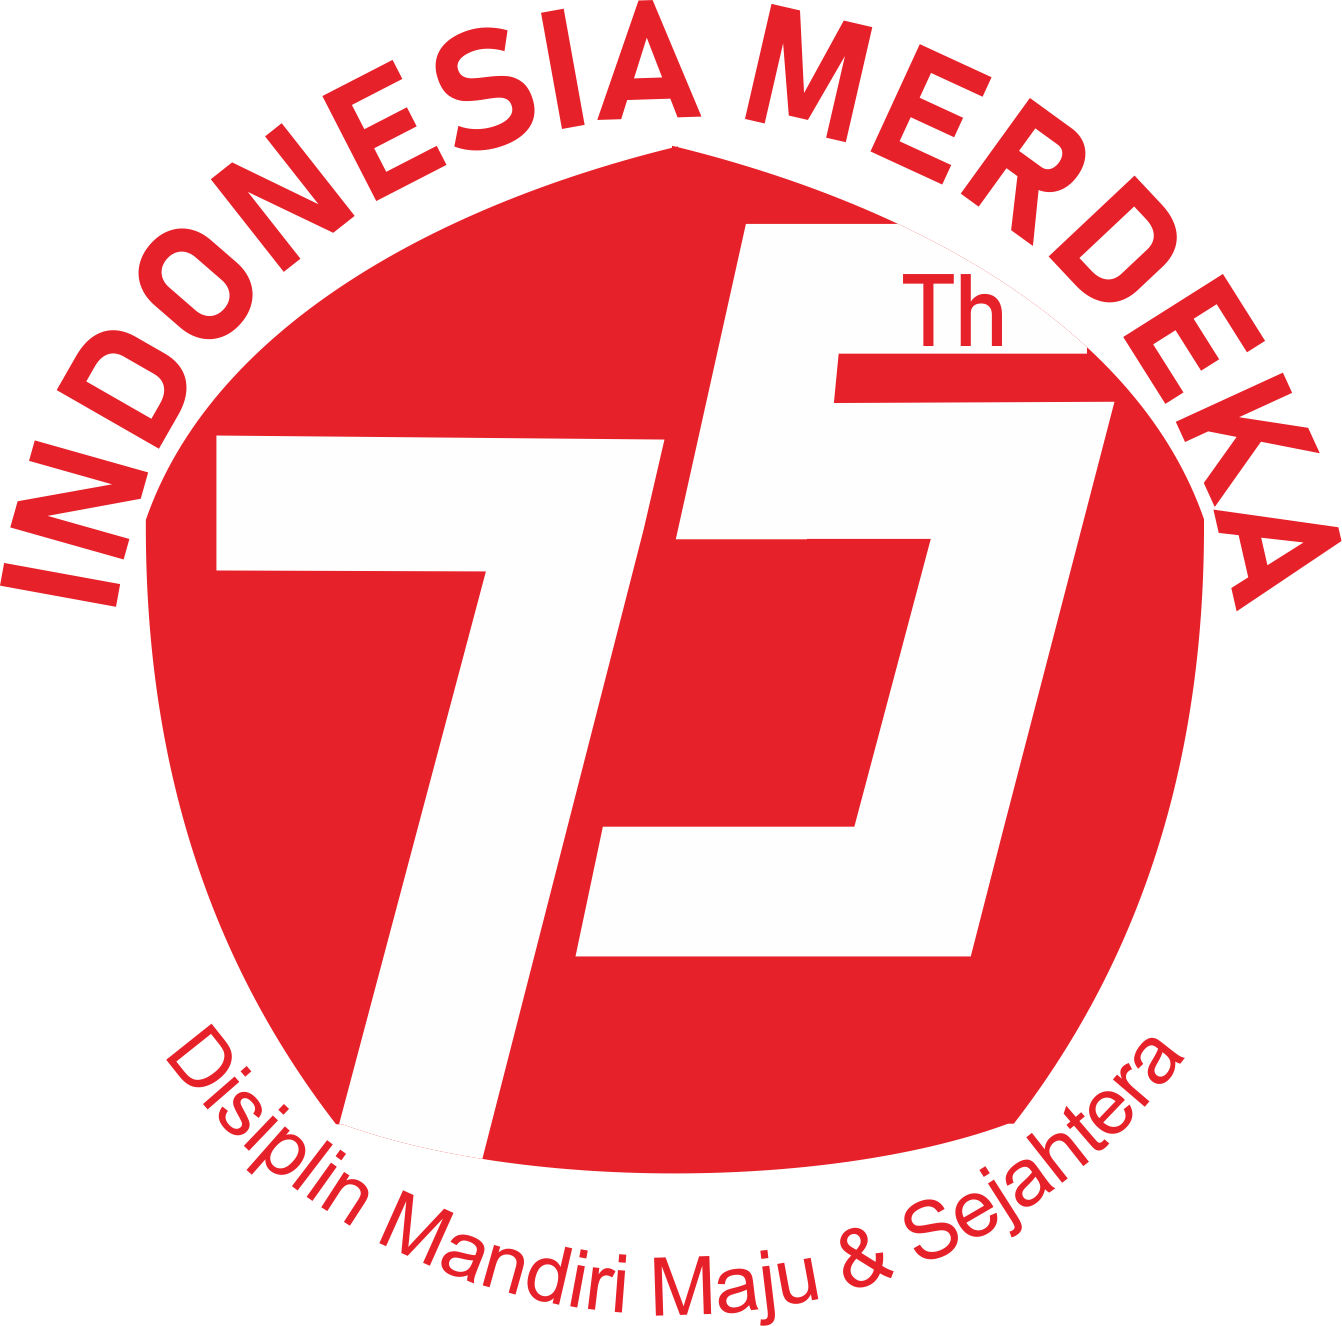  Logo  75  Tahun  Indonesia  Merdeka  Portofolio Desain  Hermawan